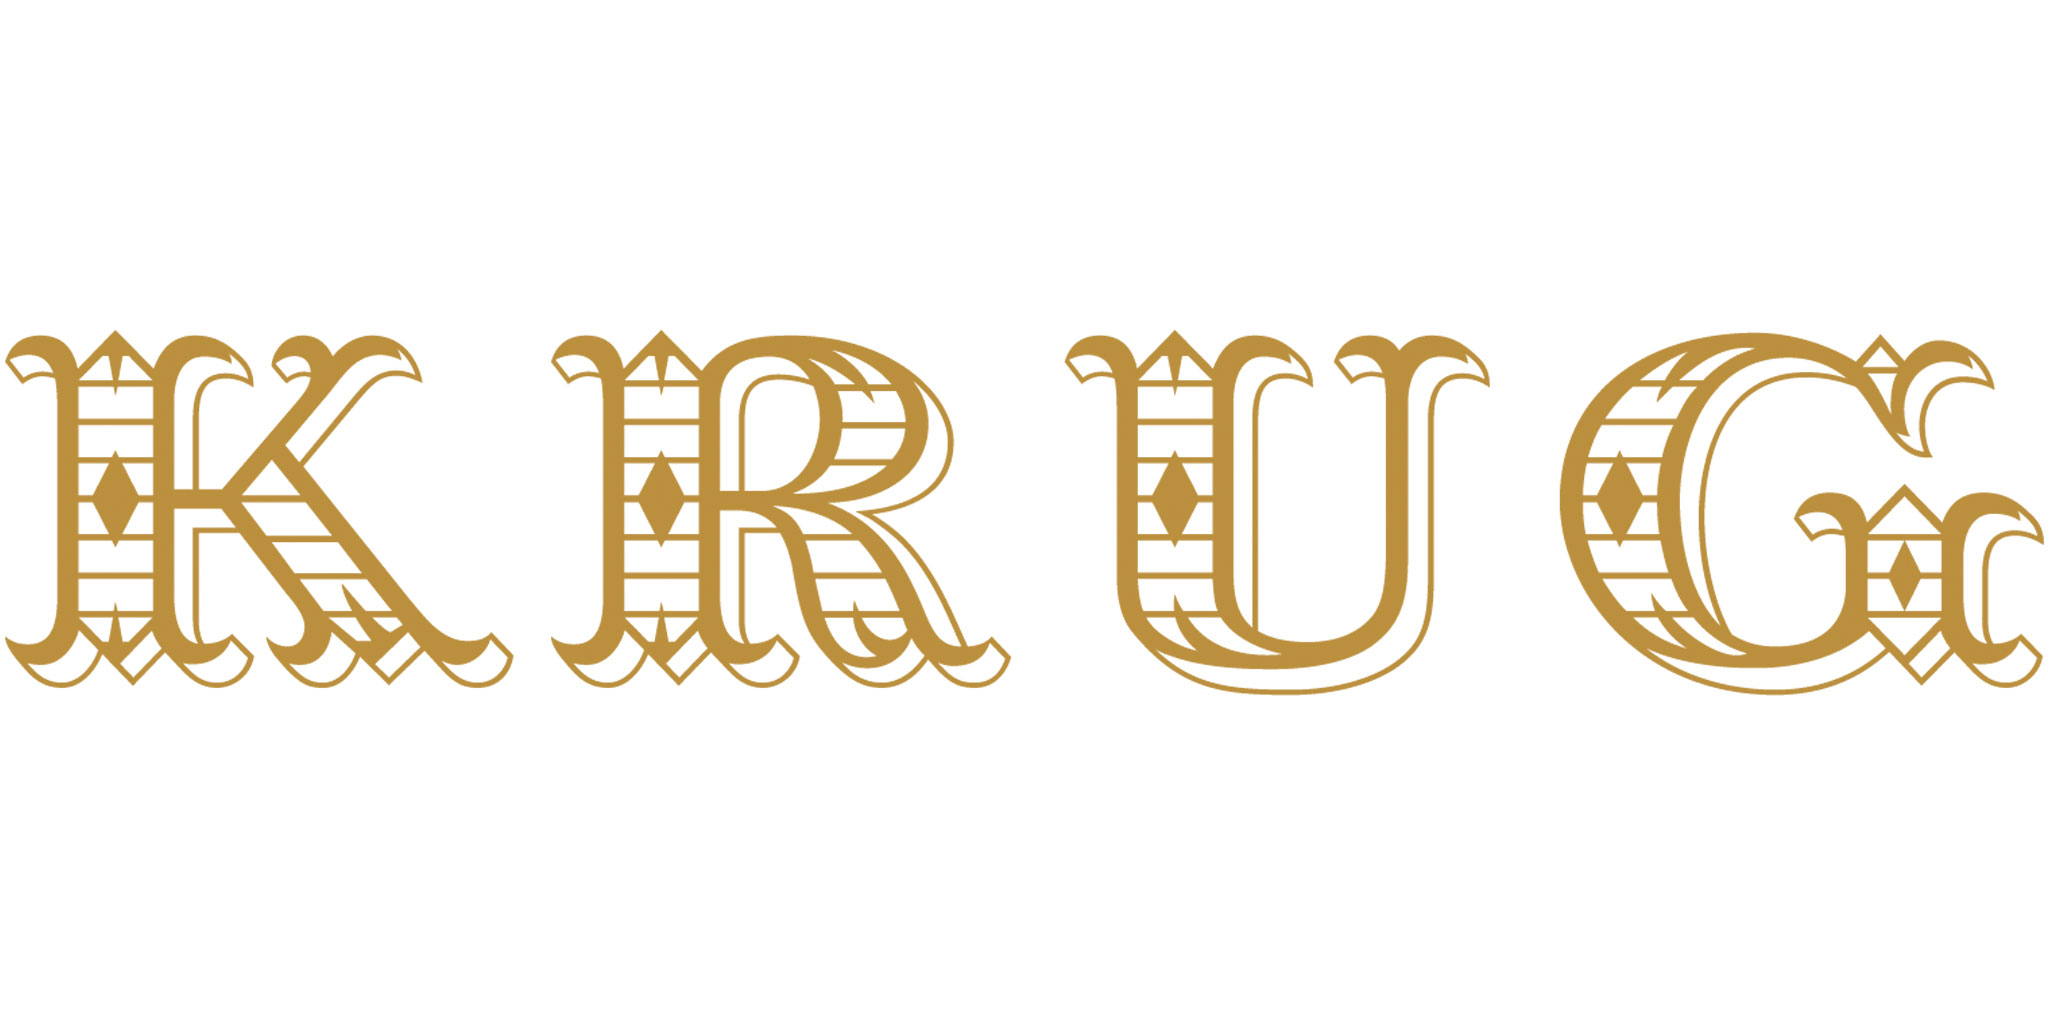 Krug champagne logo